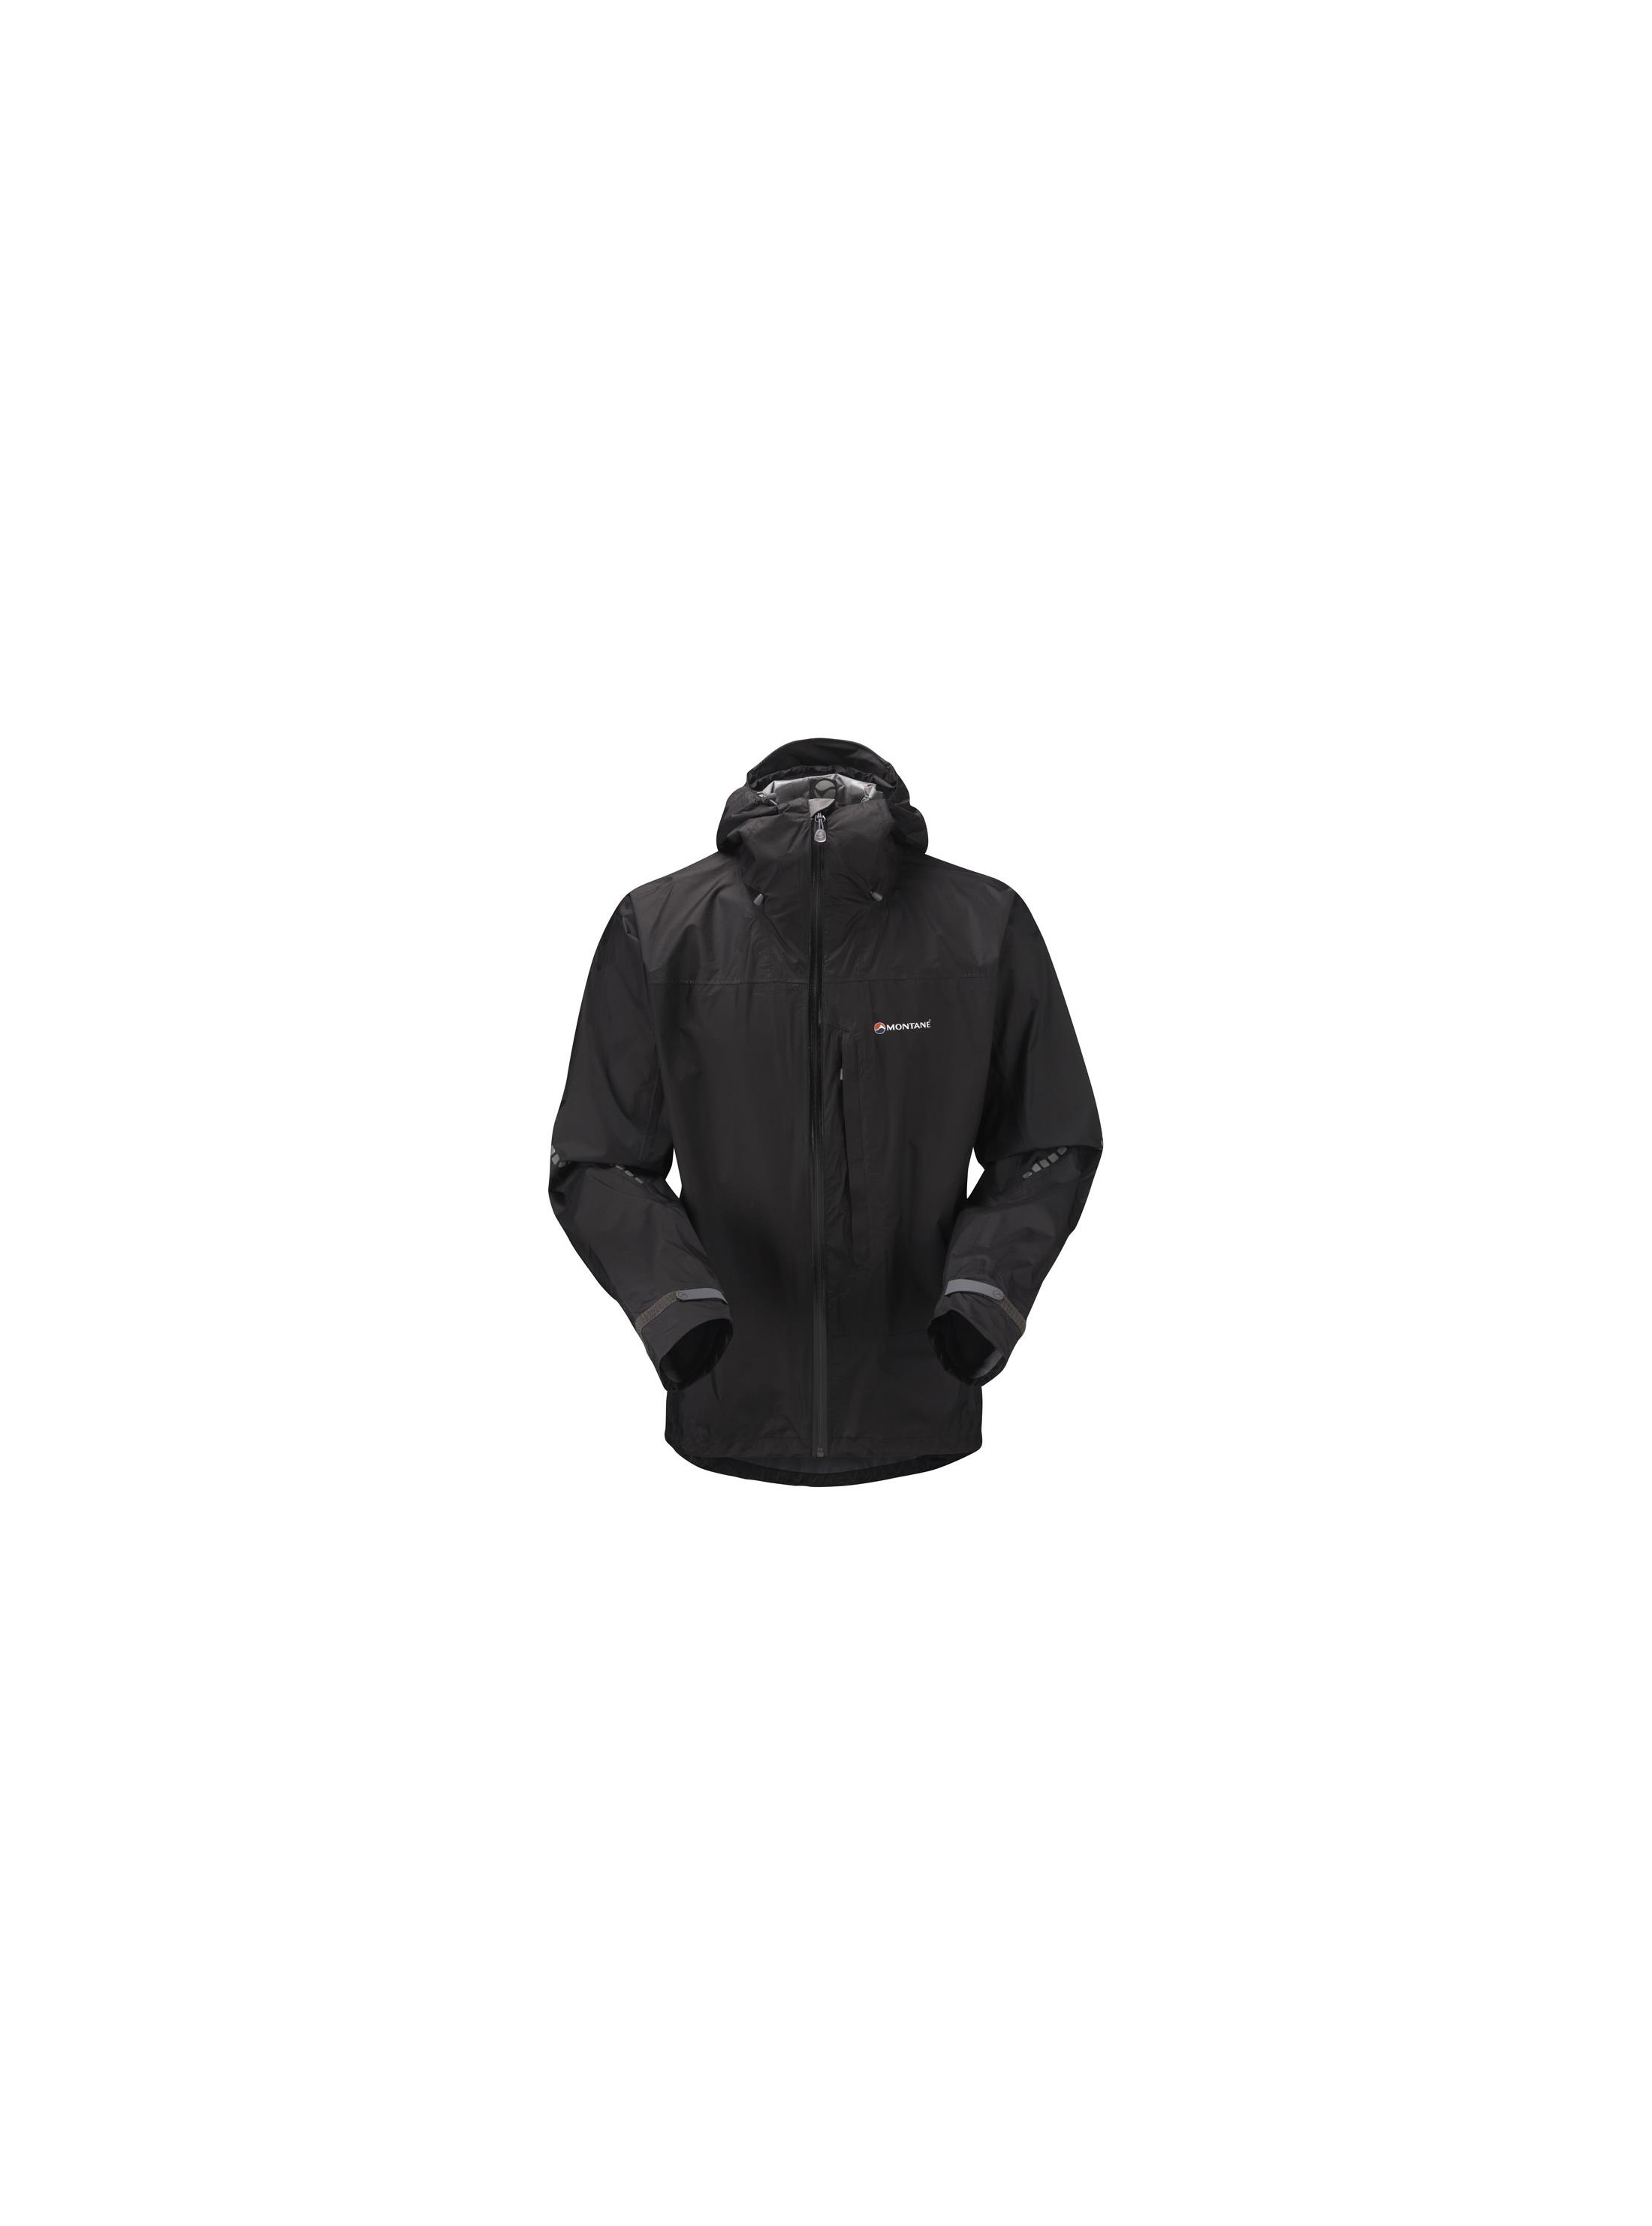 Montane Clothing Mens Minimus Jacket: waterproof, ultra-lightweight ...